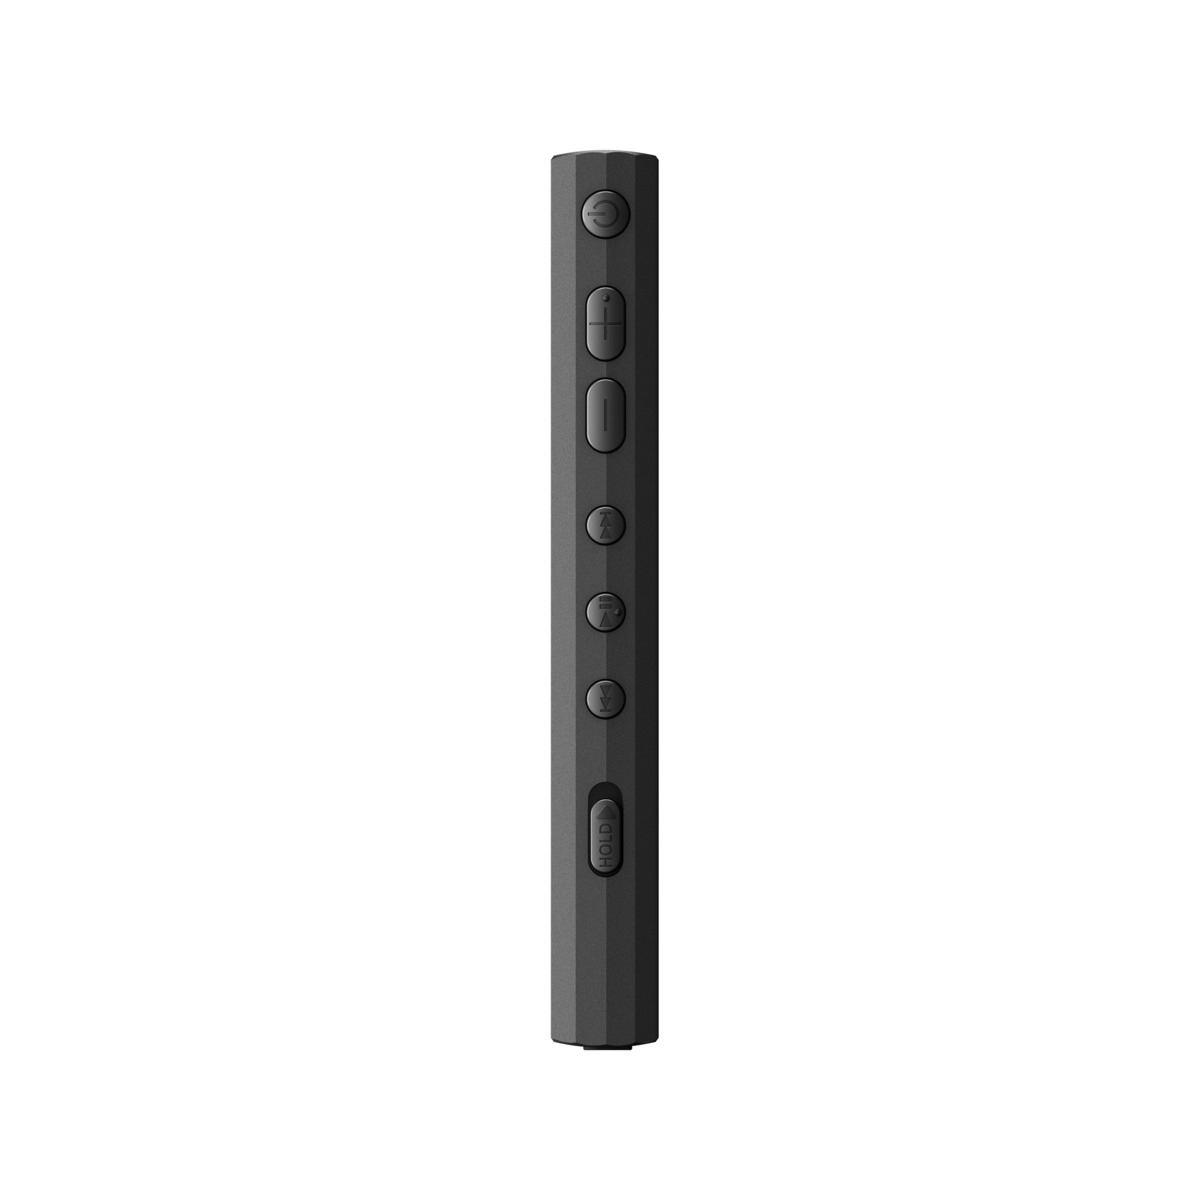 NW-A306 高解析音質 Walkman 右側功能鍵圖式